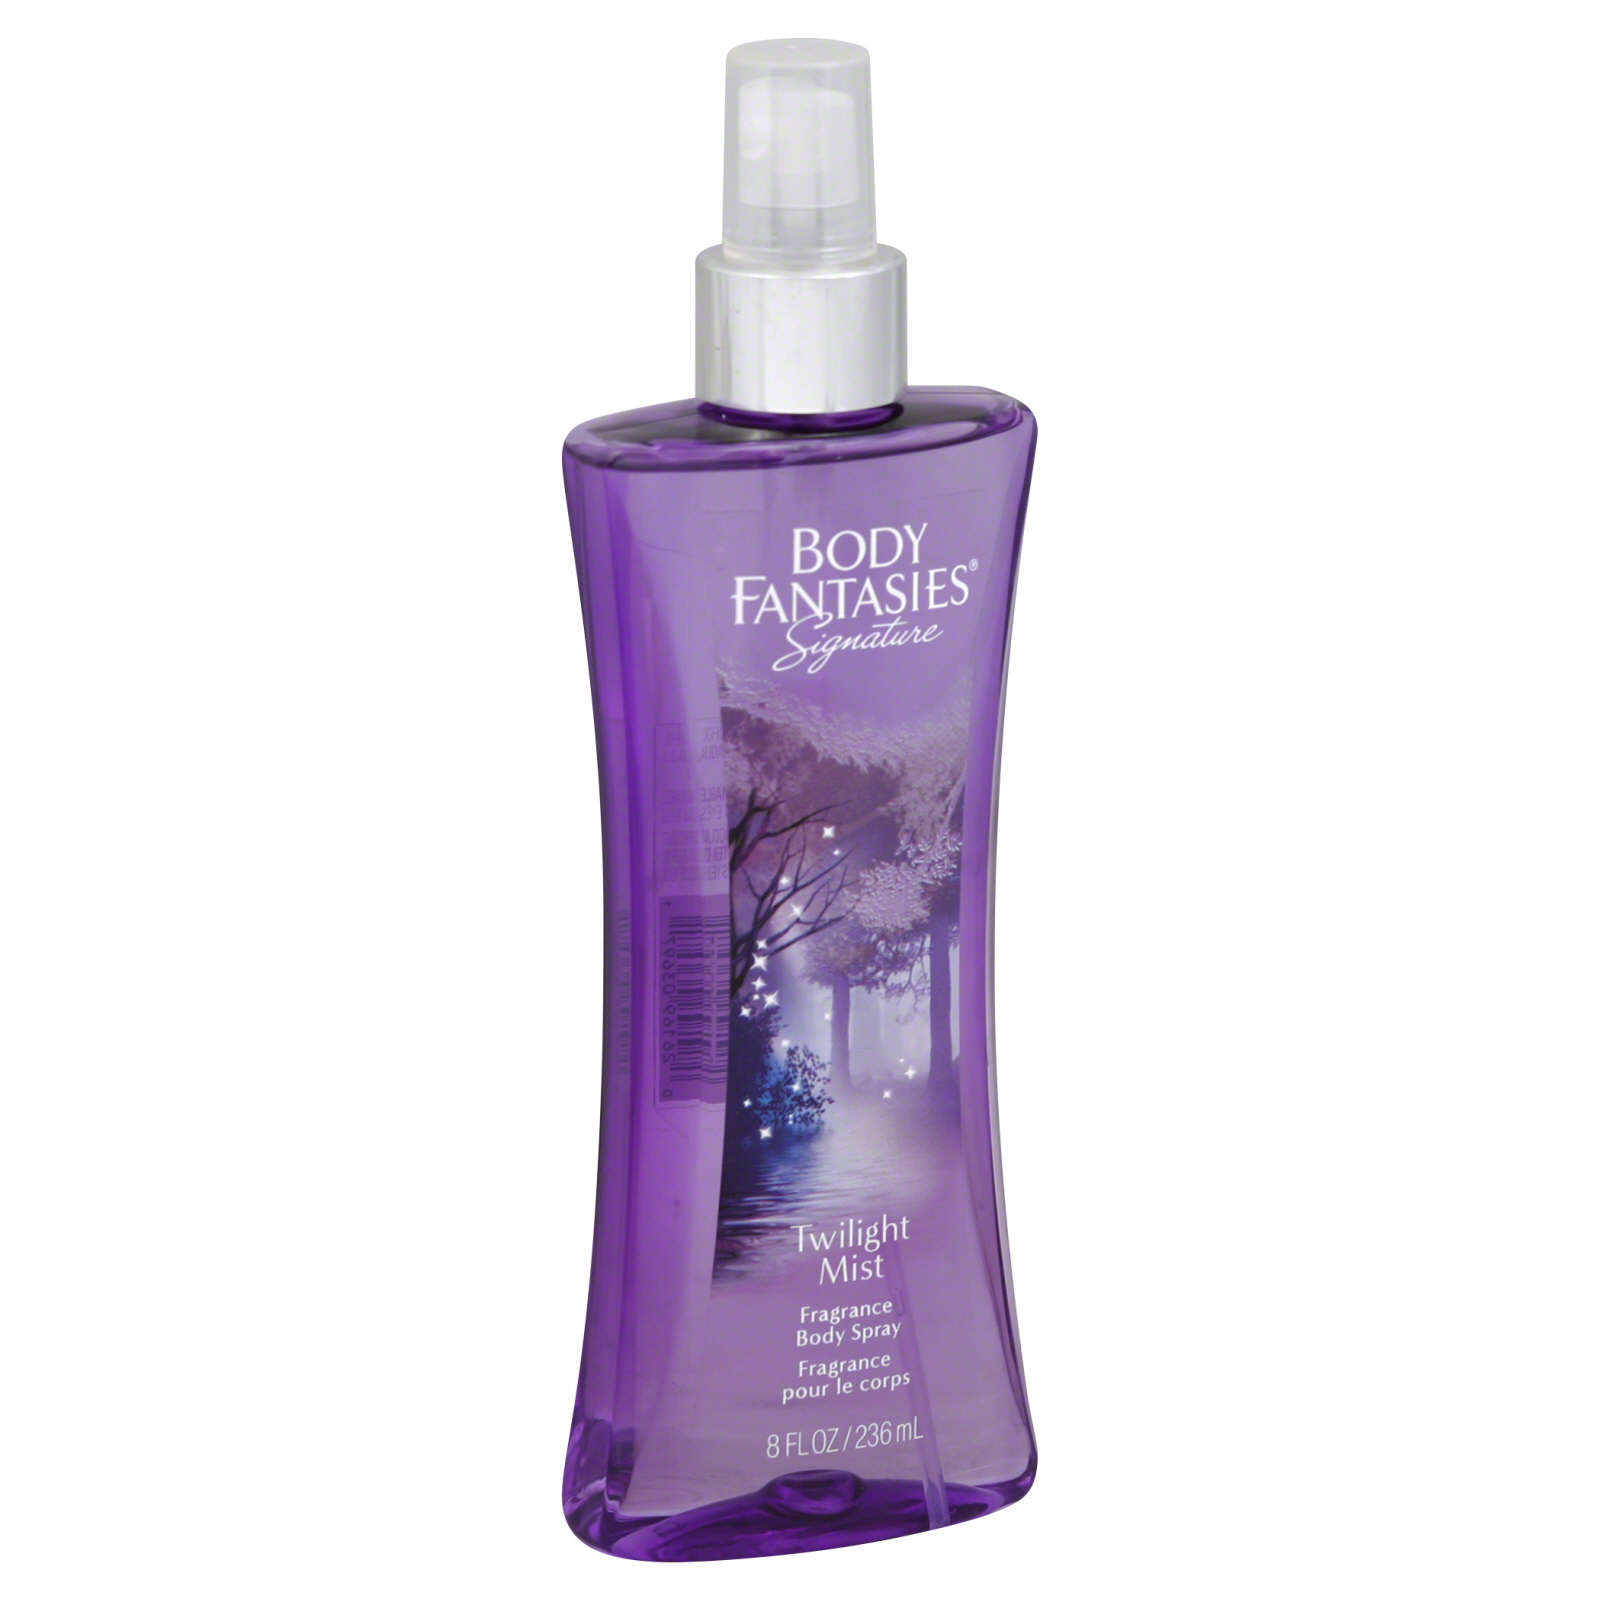 Body Fantasies Signature Twilight Mist Fragrance Body Spray 8 fl oz